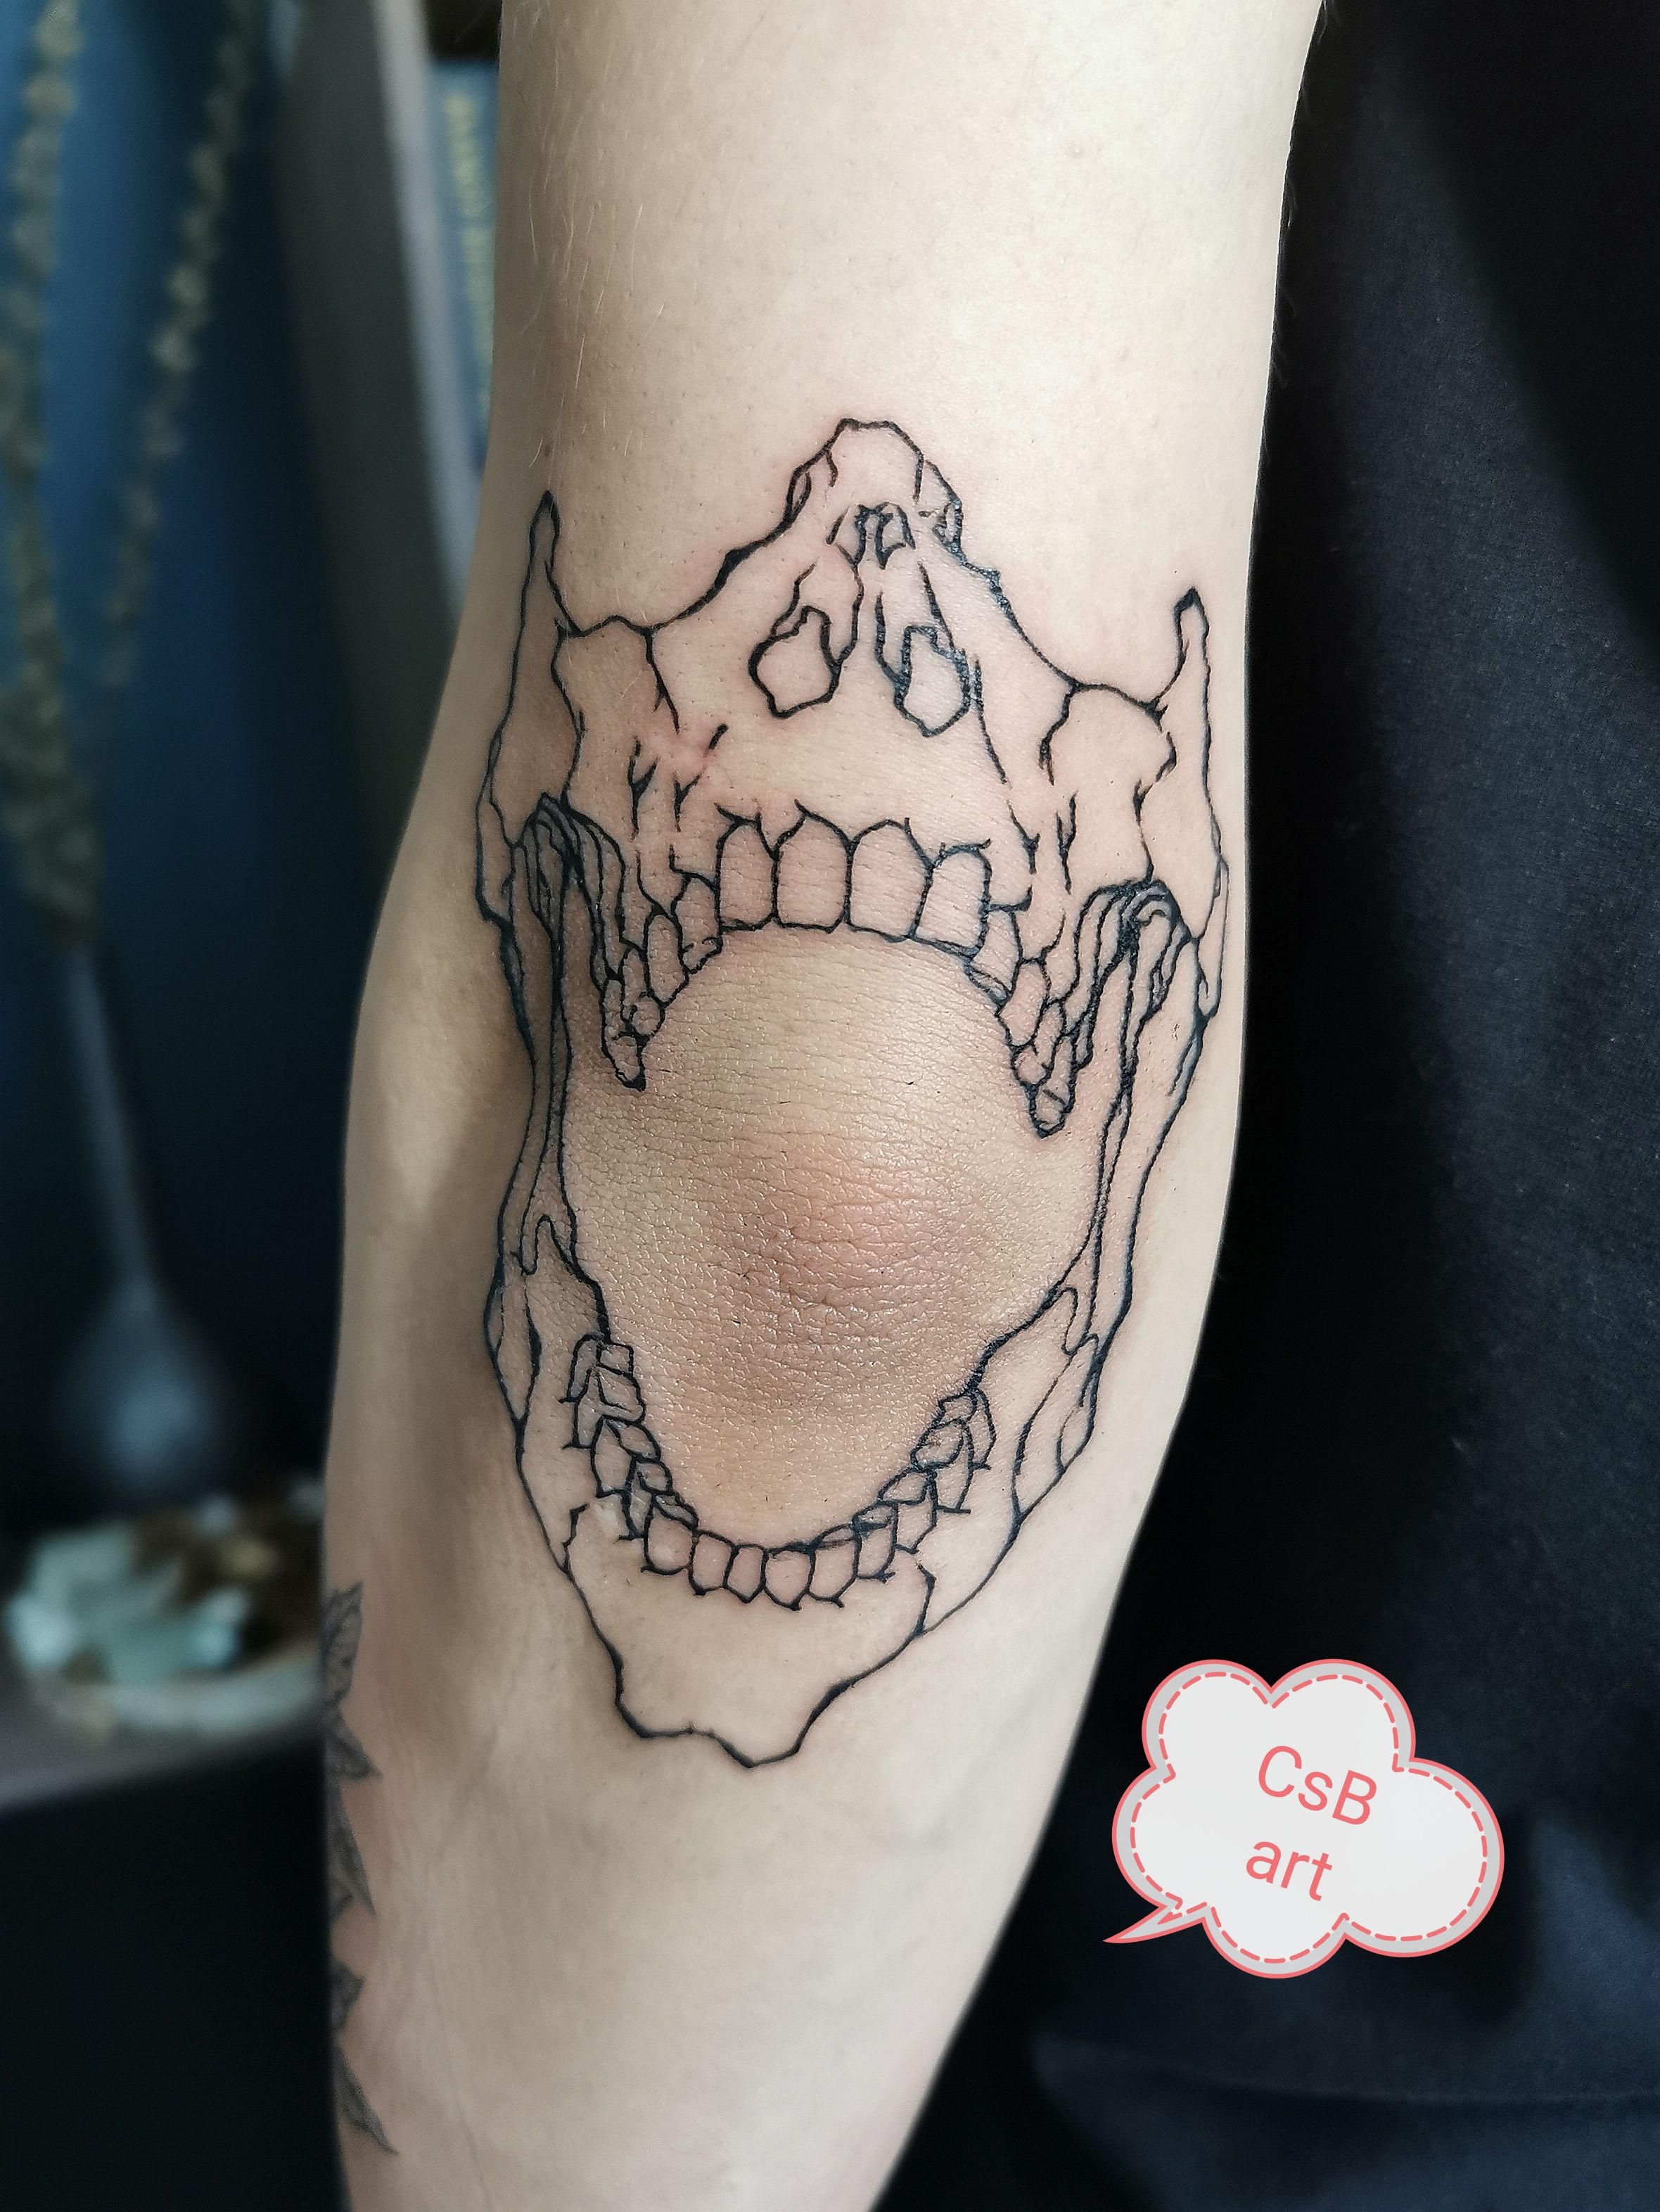 Tattoo uploaded by jme graham  Shark jaw on knee  Tattoodo